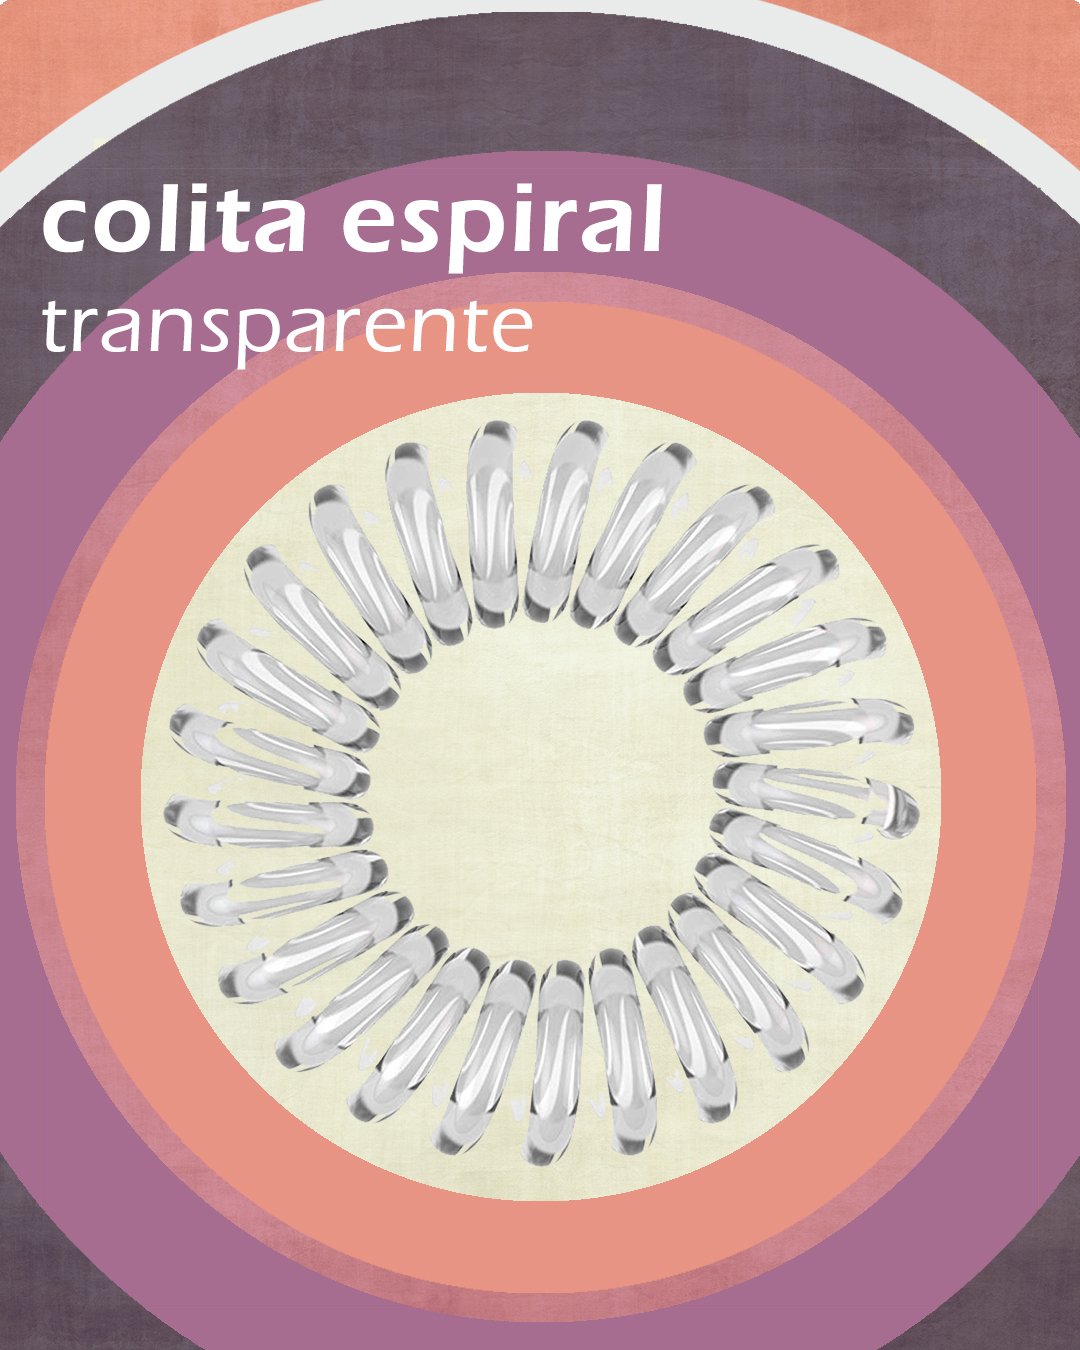 Colita espiral transparente